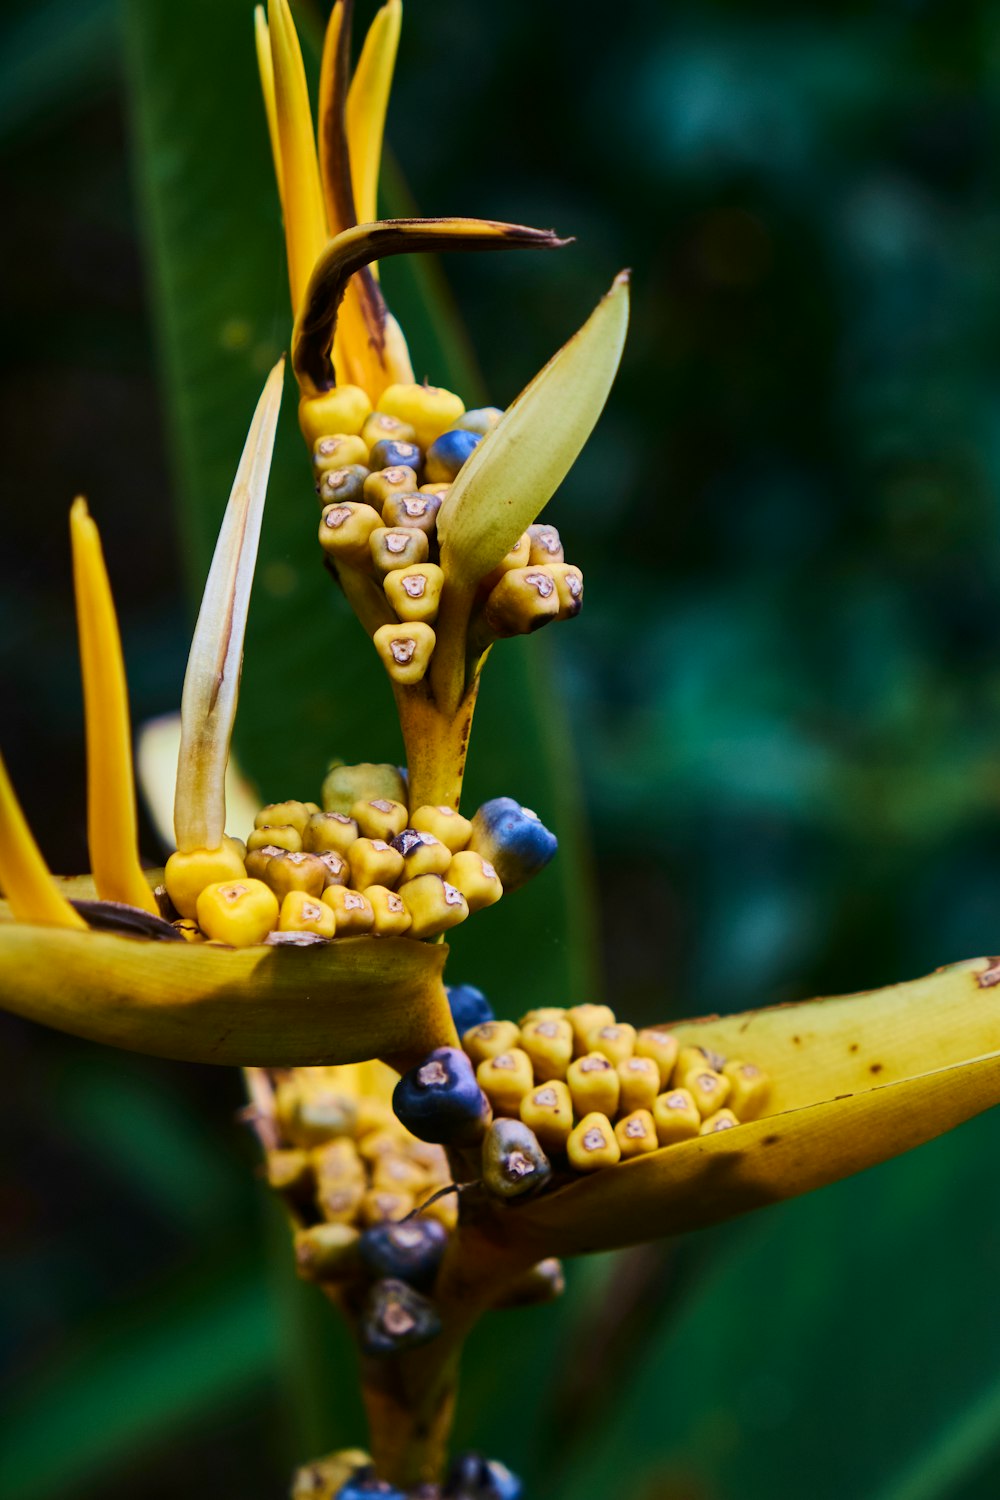 yellow banana fruit in close up photography